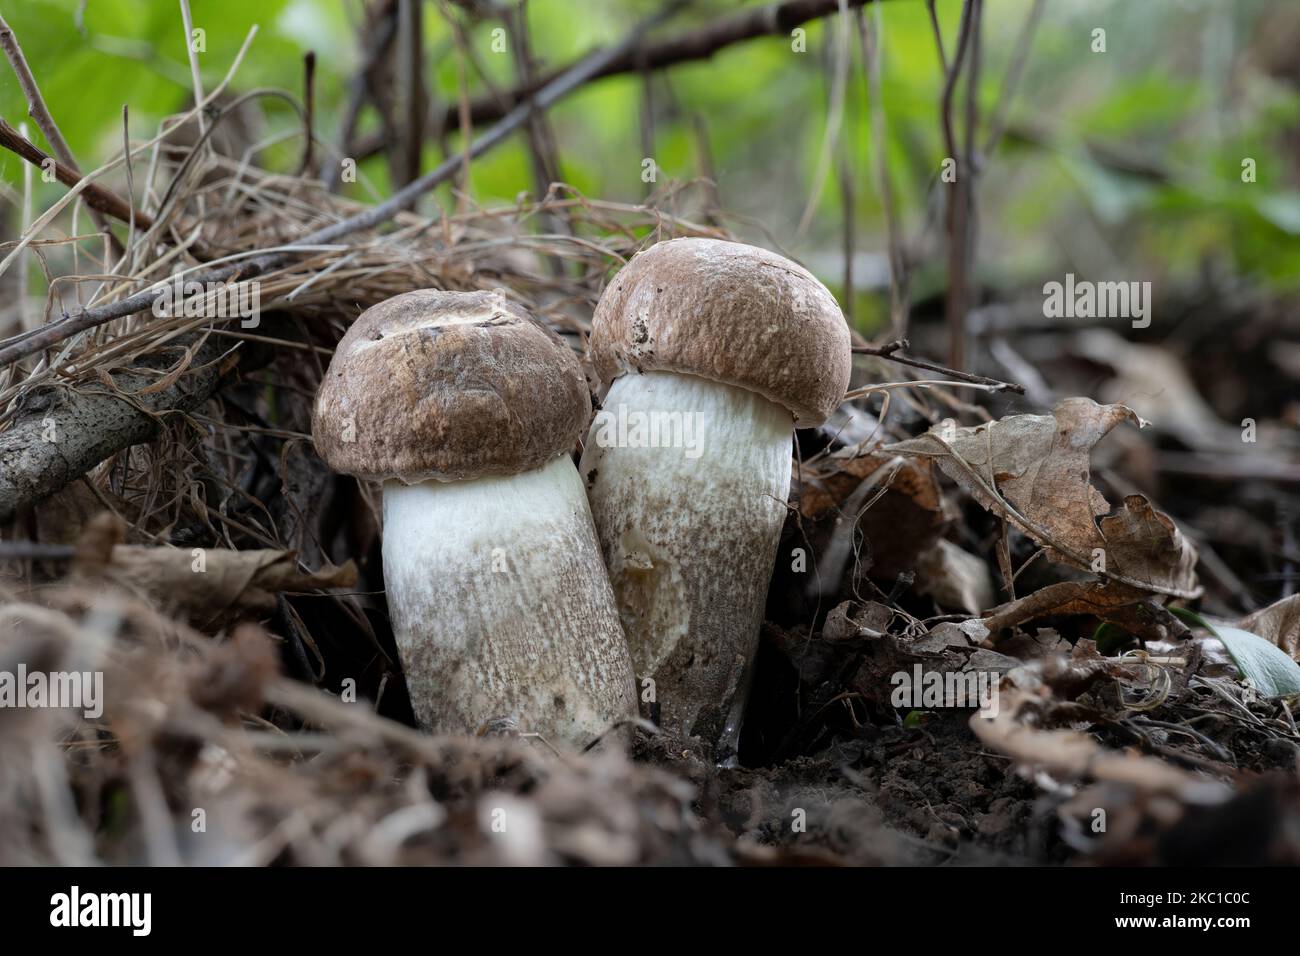 Two young Leccinum duriusculum mushrooms under aspen trees Stock Photo